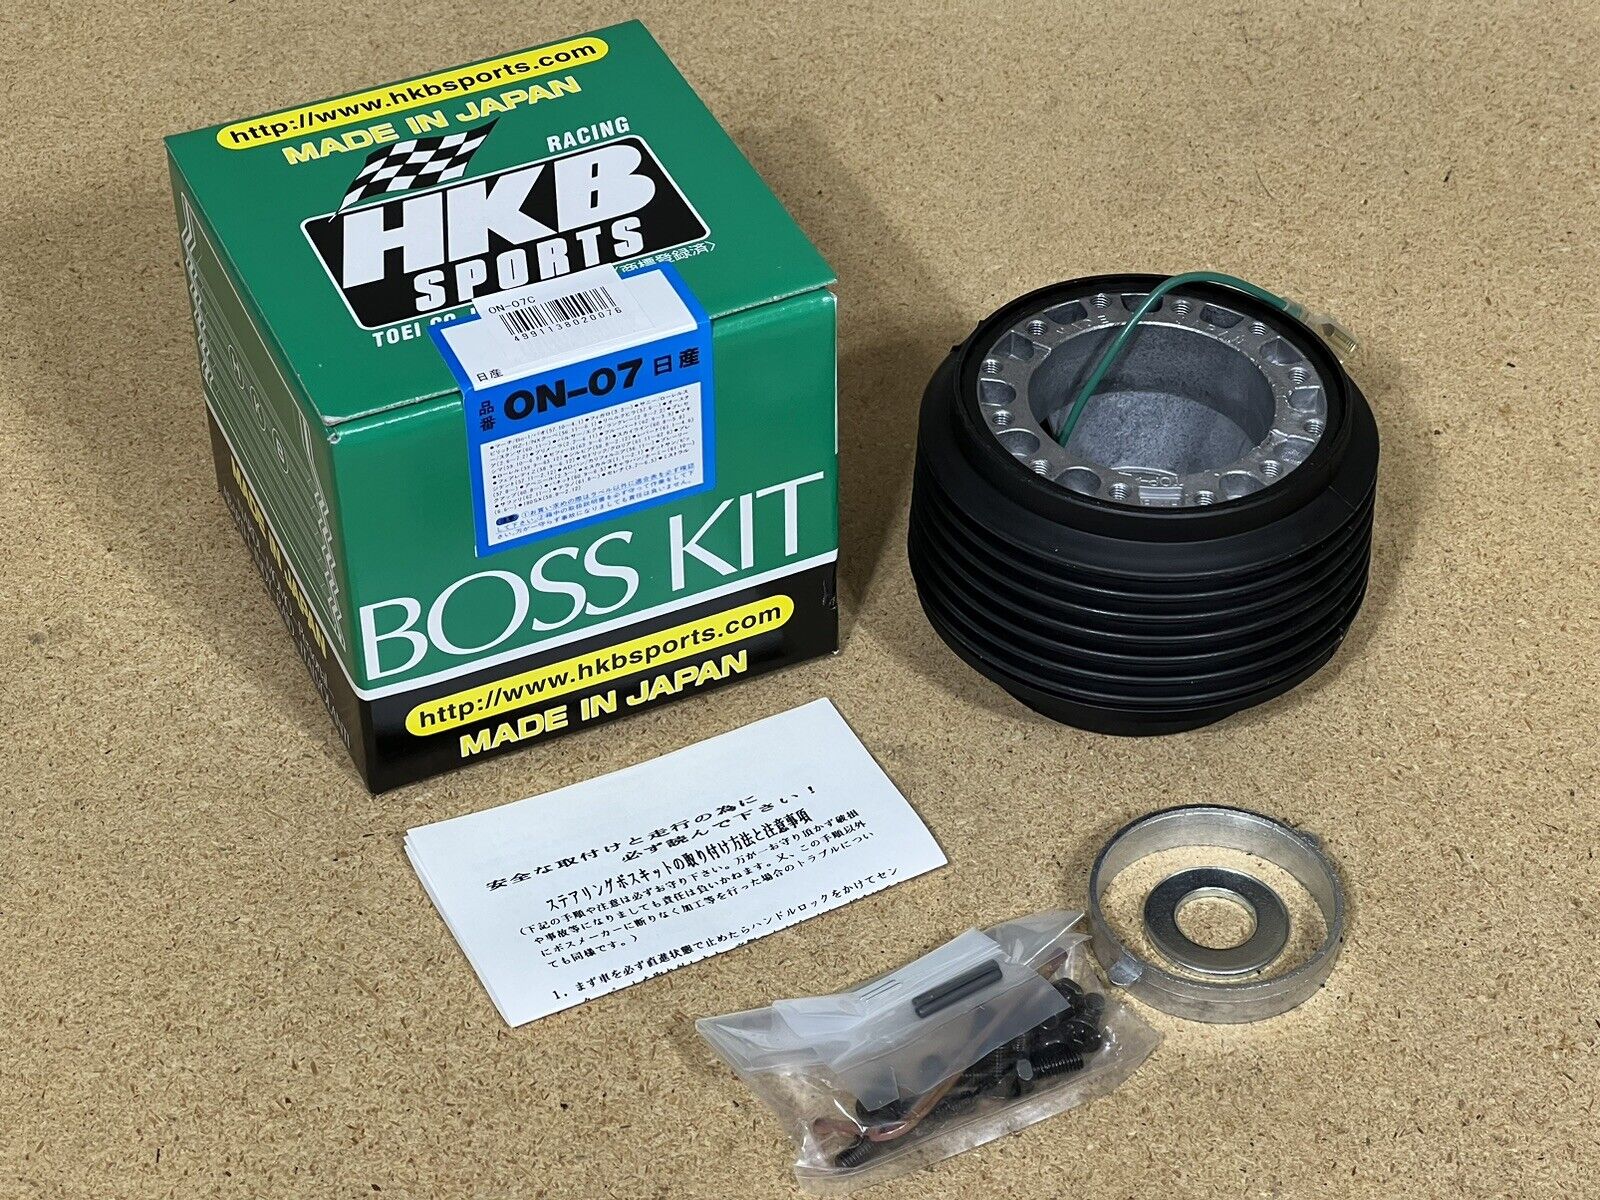 HKB SPORTS Boss Kit Steering Wheel Adapter Hub 87-97 Nissan Safari Patrol Y60